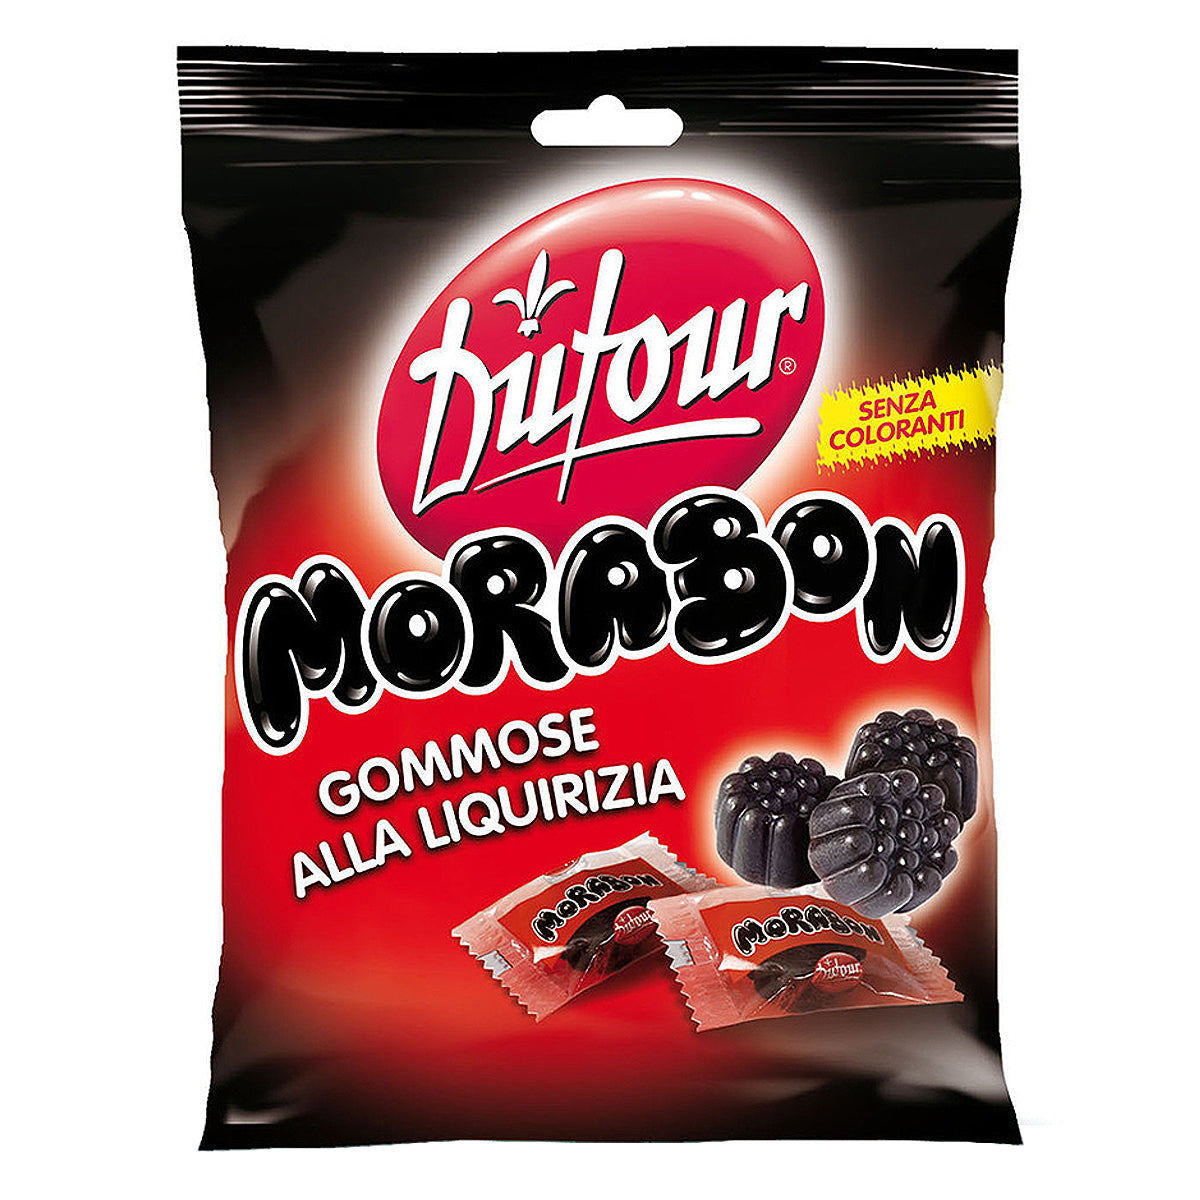 Morabon Licorice Gummies